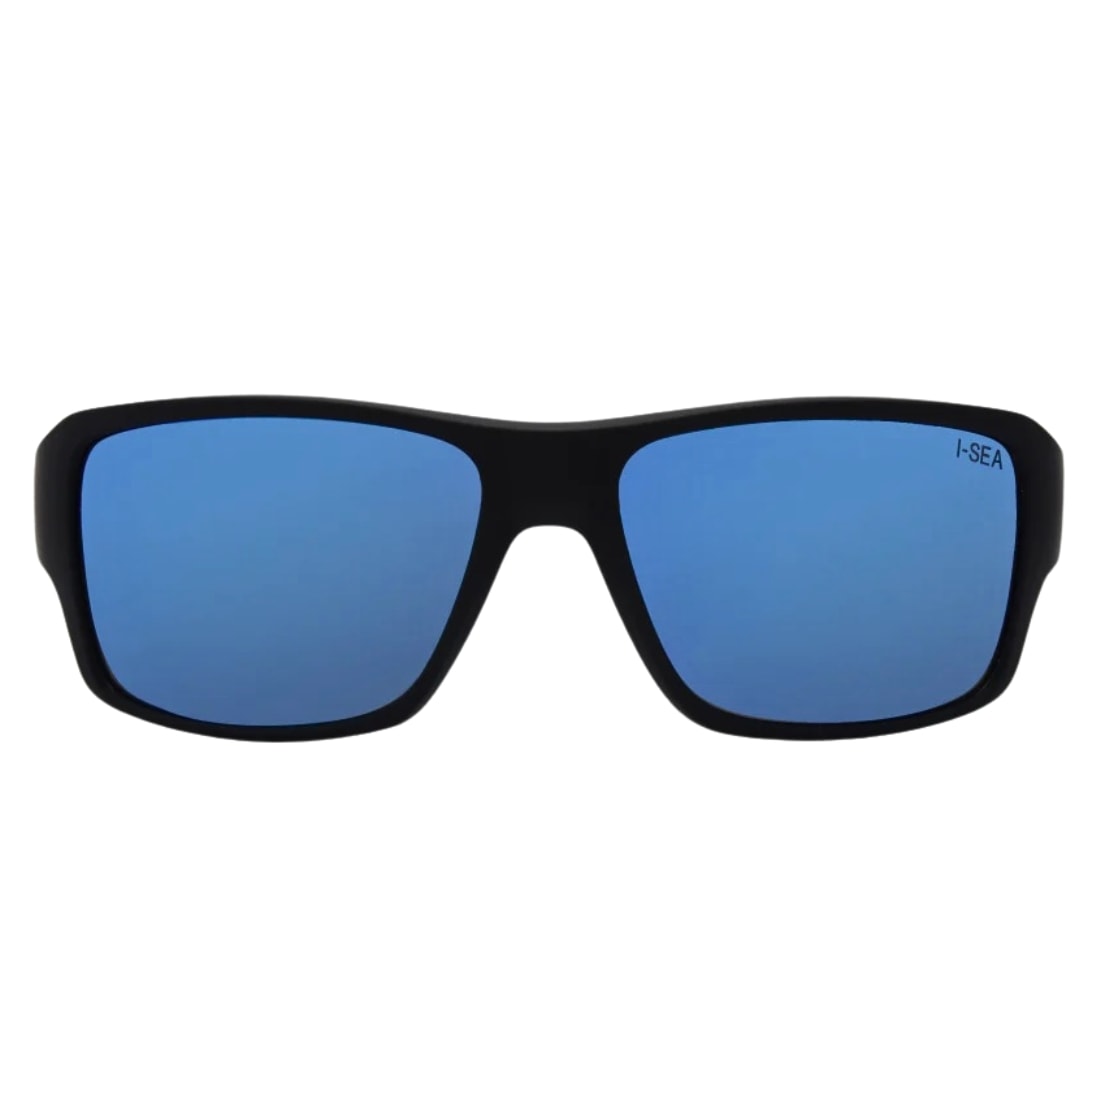 I-Sea Freebird Sunglasses - Black Rubber/Blue Mirror Polarised - Wrap Around Sunglasses by I-Sea